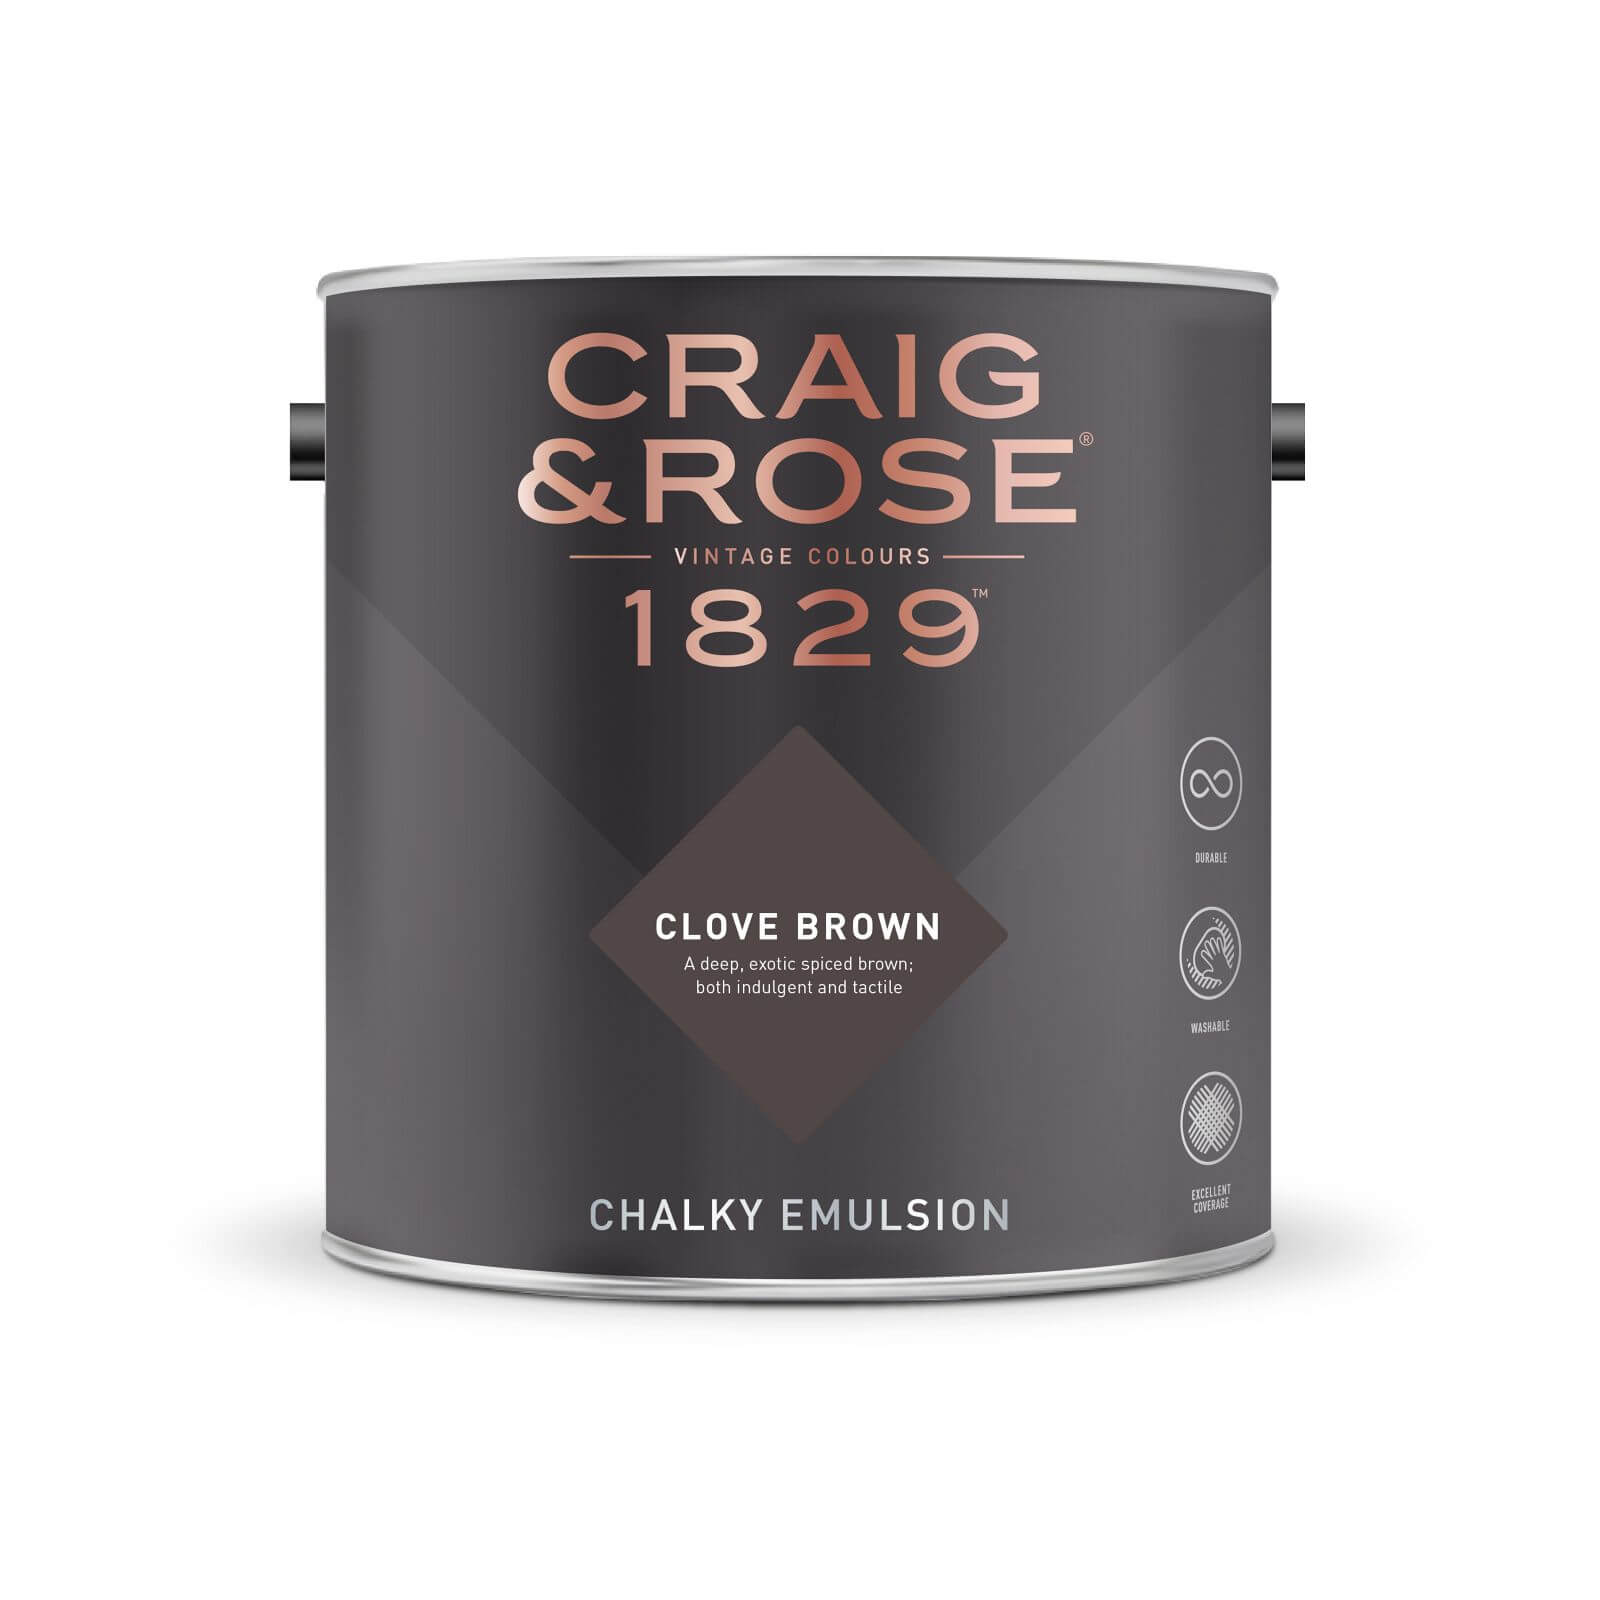 Craig & Rose 1829 Chalky Emulsion Paint Clove Brown - 5L